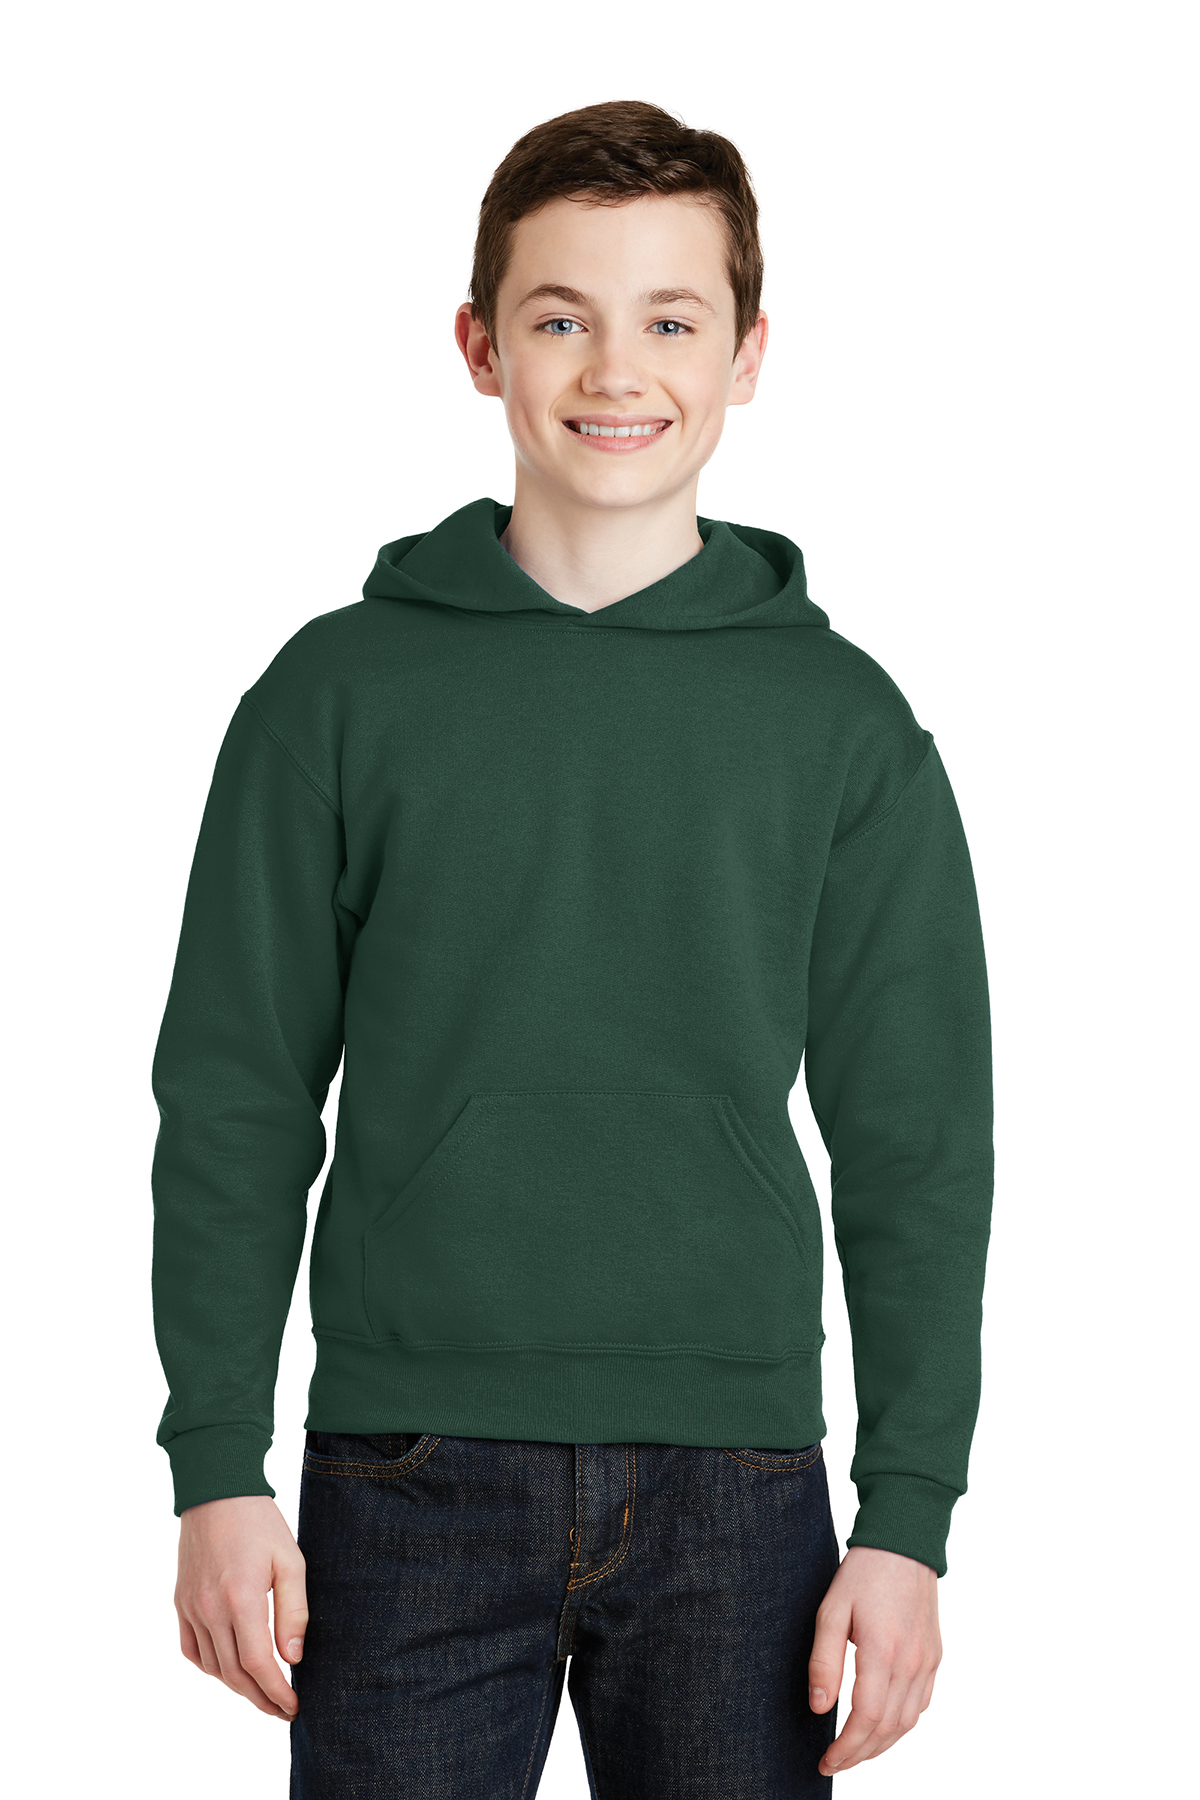 Jerzees Boys Youth Pullover Hood Hooded Sweatshirt